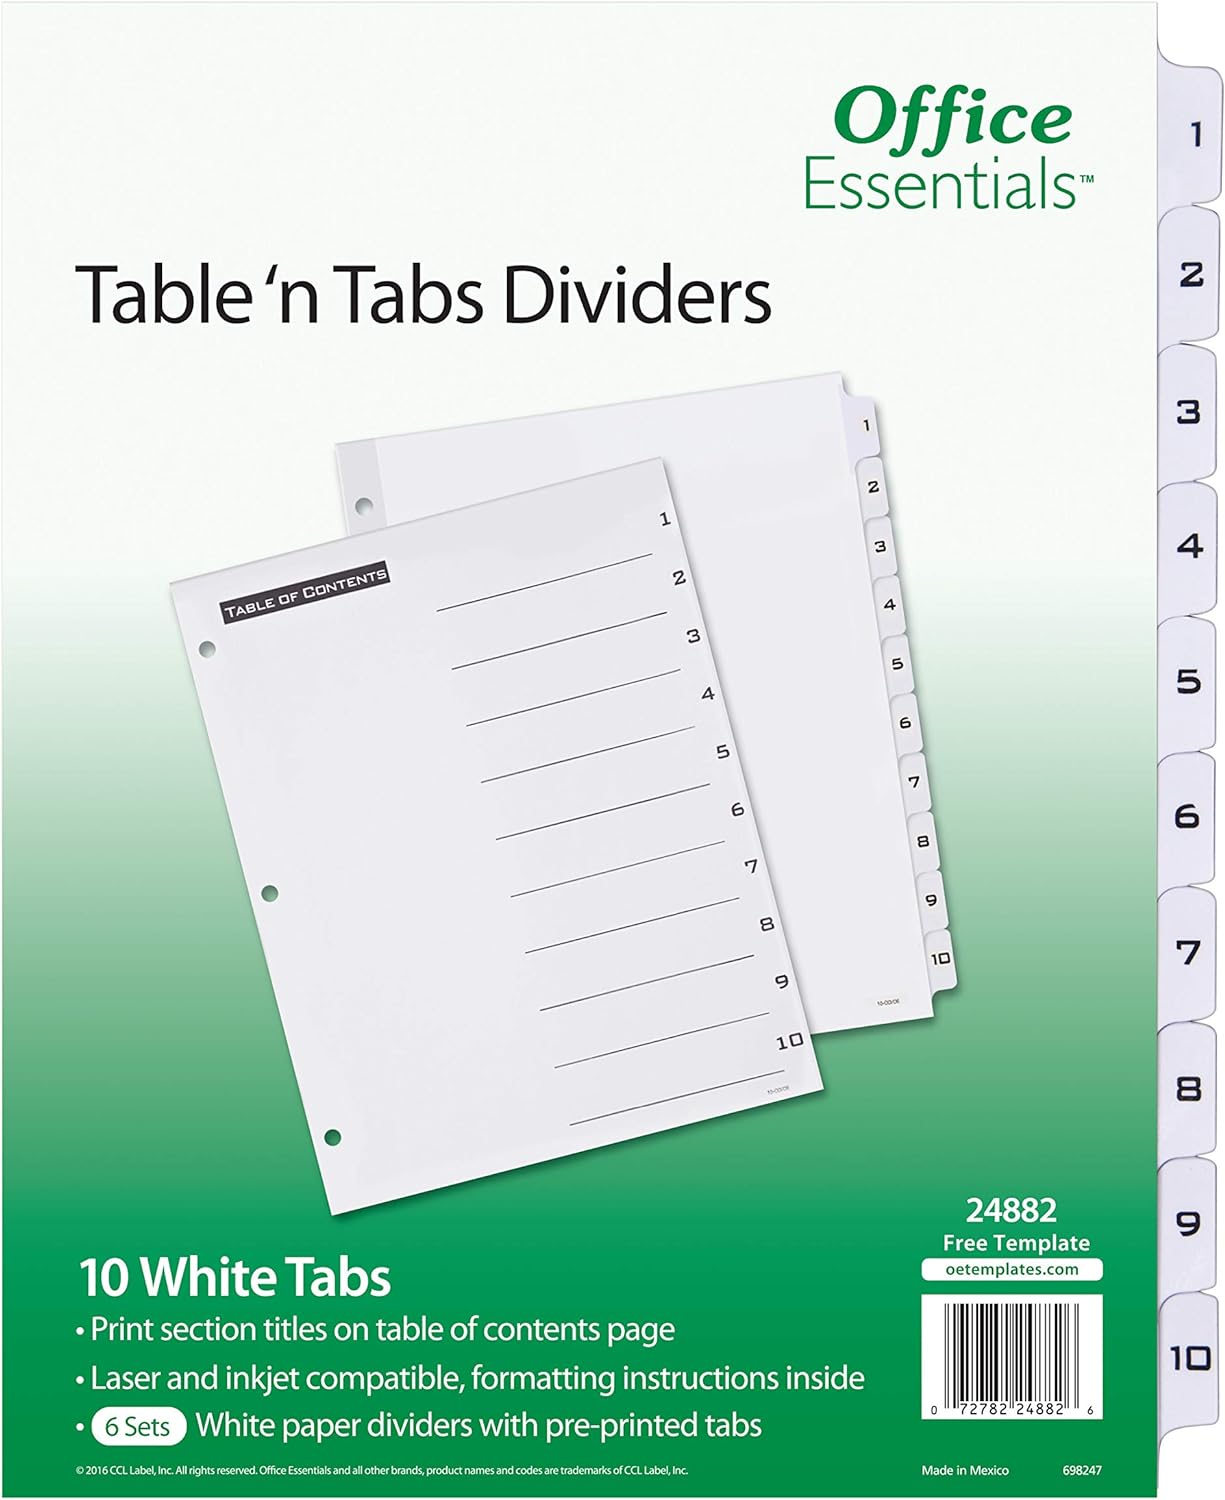 Avery Office Essentials Table 'n Tabs Dividers, 8-1/2 x 11, 1-10 Tab, Black/White Tab, Laser/Inkjet, 6 Pk (24882)